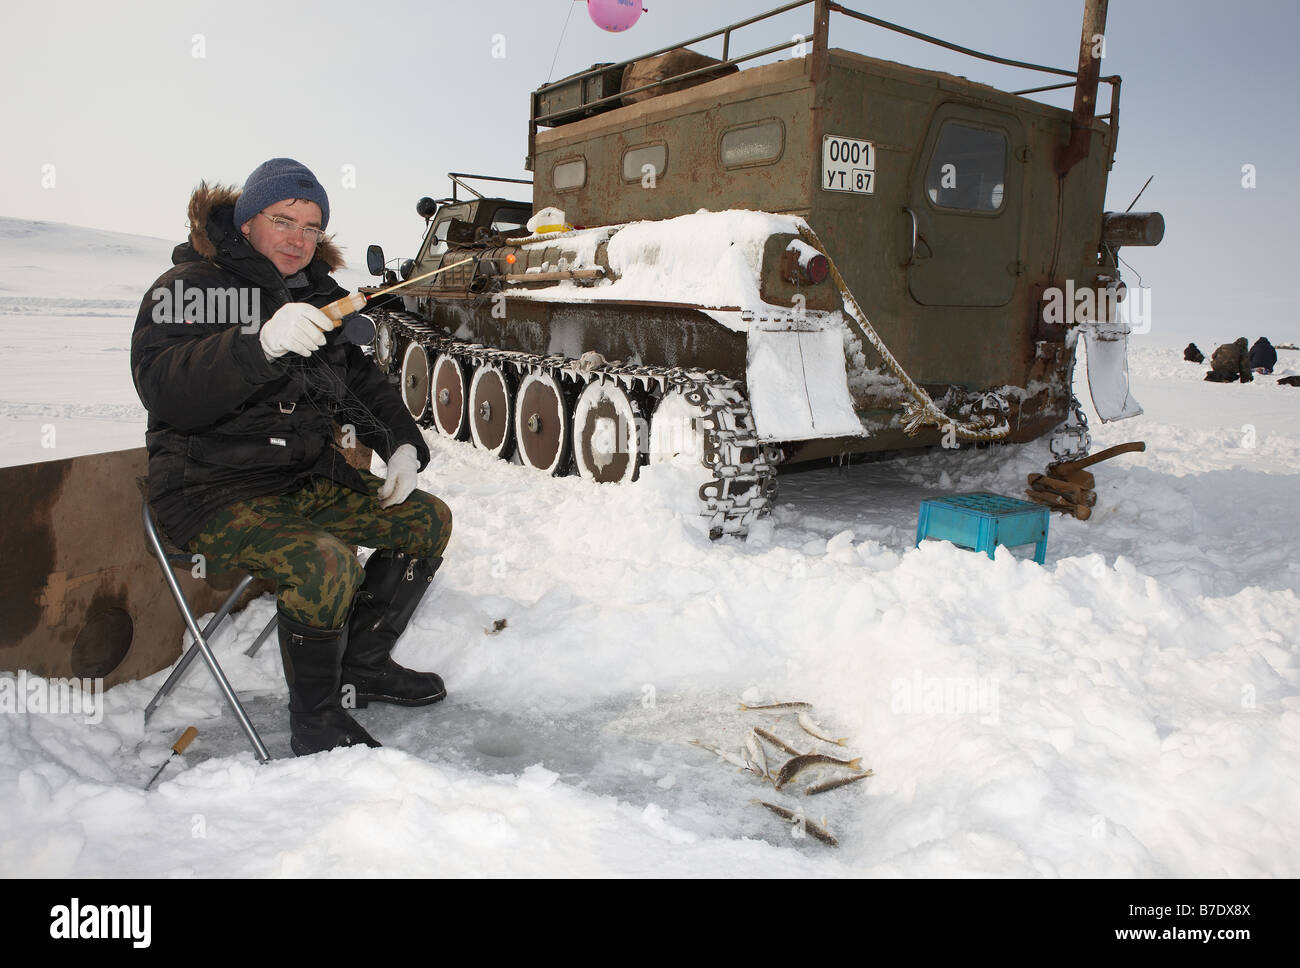 Ice fishing for smelts by modified tank (Vezdekhod) Anadyr Chukotka, Siberia Russia Stock Photo